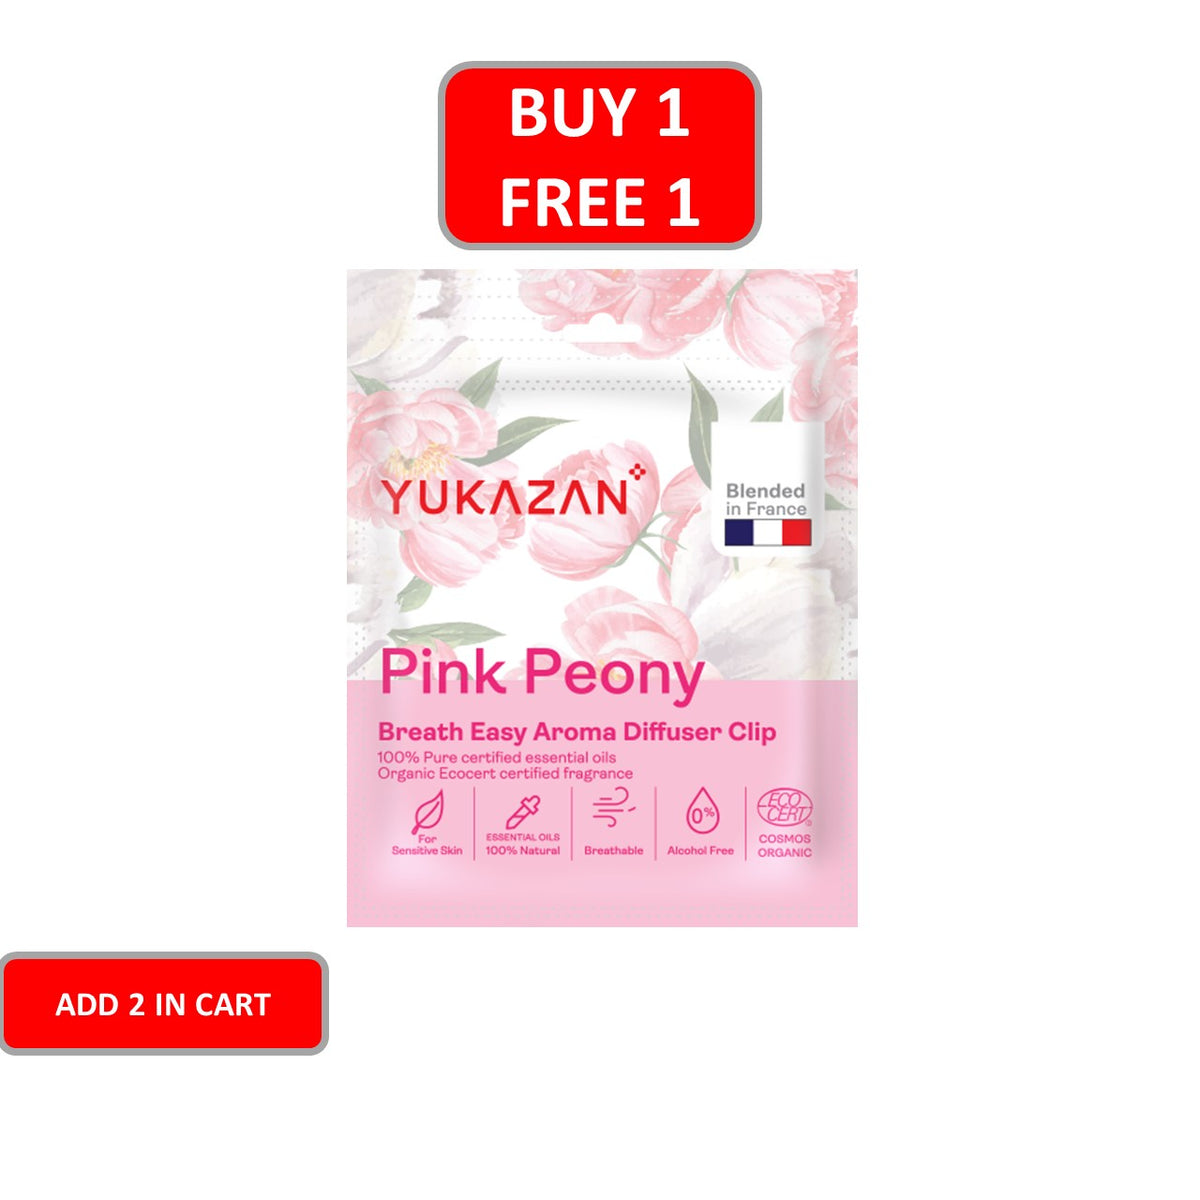 Yukazan Breath Easy Aroma Diffuser Clip (Pink Peony)